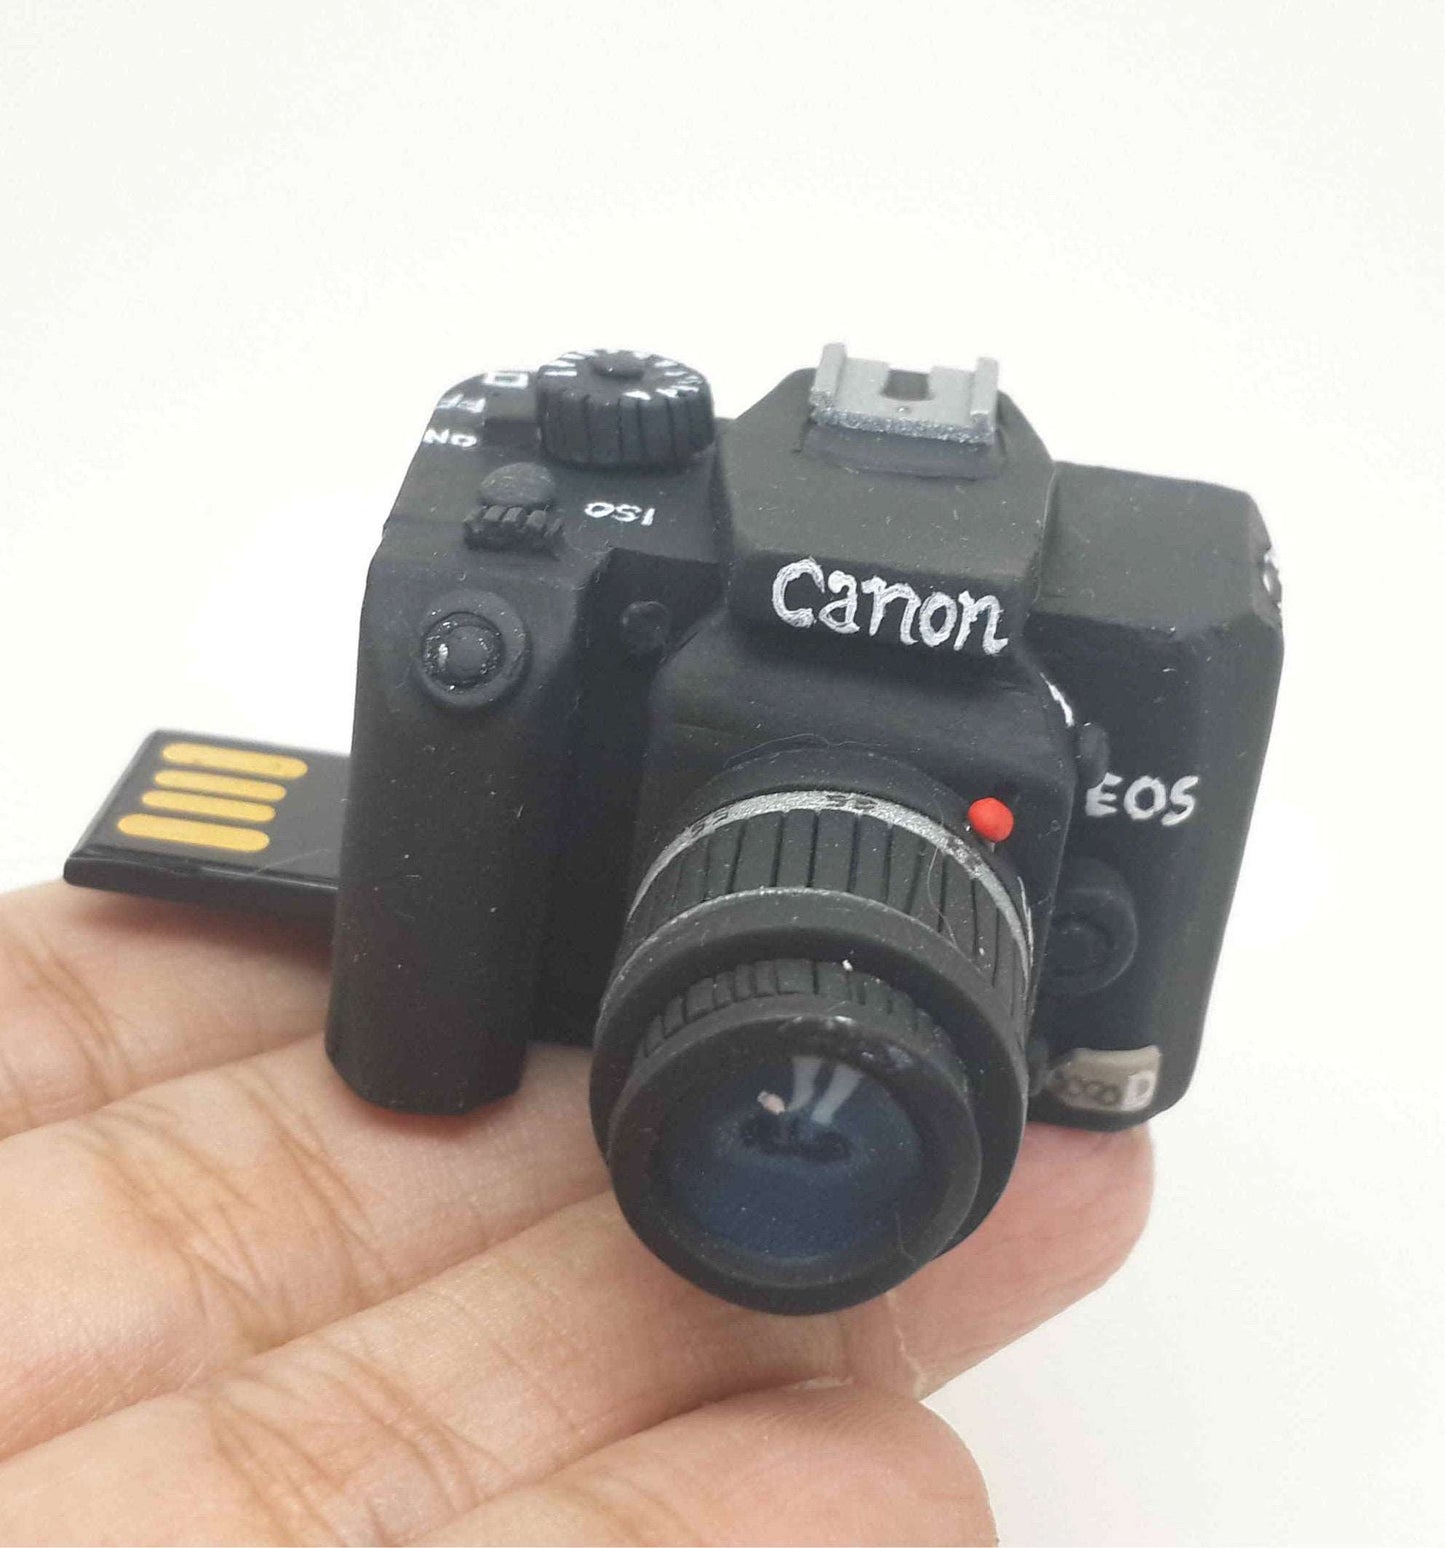 Canon Miniature DSLR Camera Novelty Pen Drive